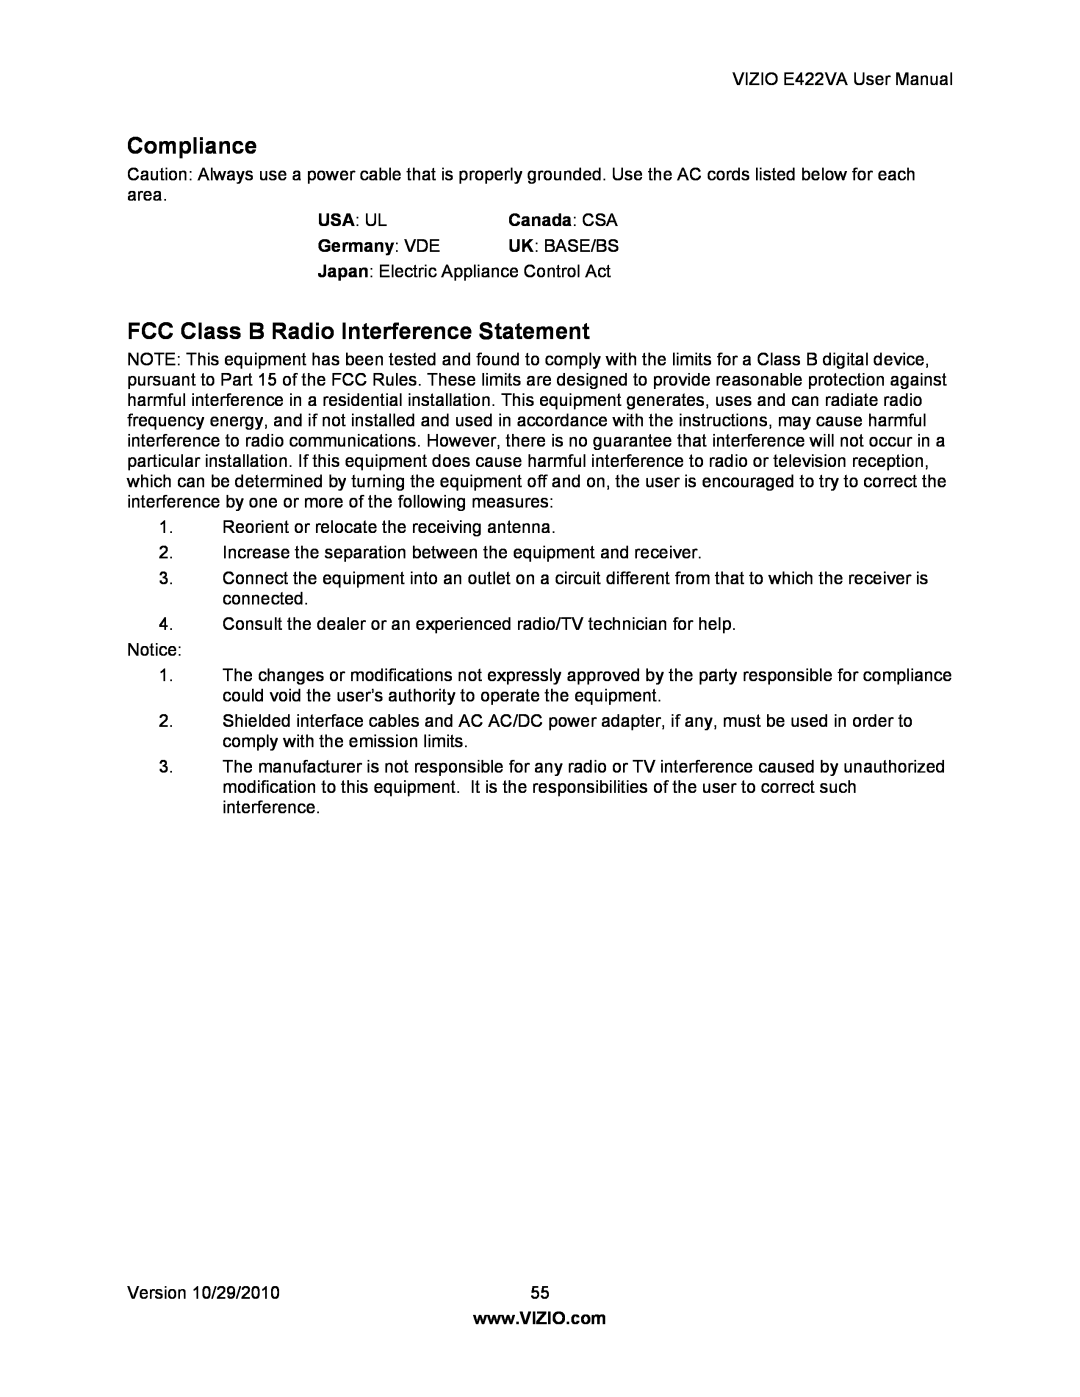 Xerox E422VA user manual Compliance, FCC Class B Radio Interference Statement 